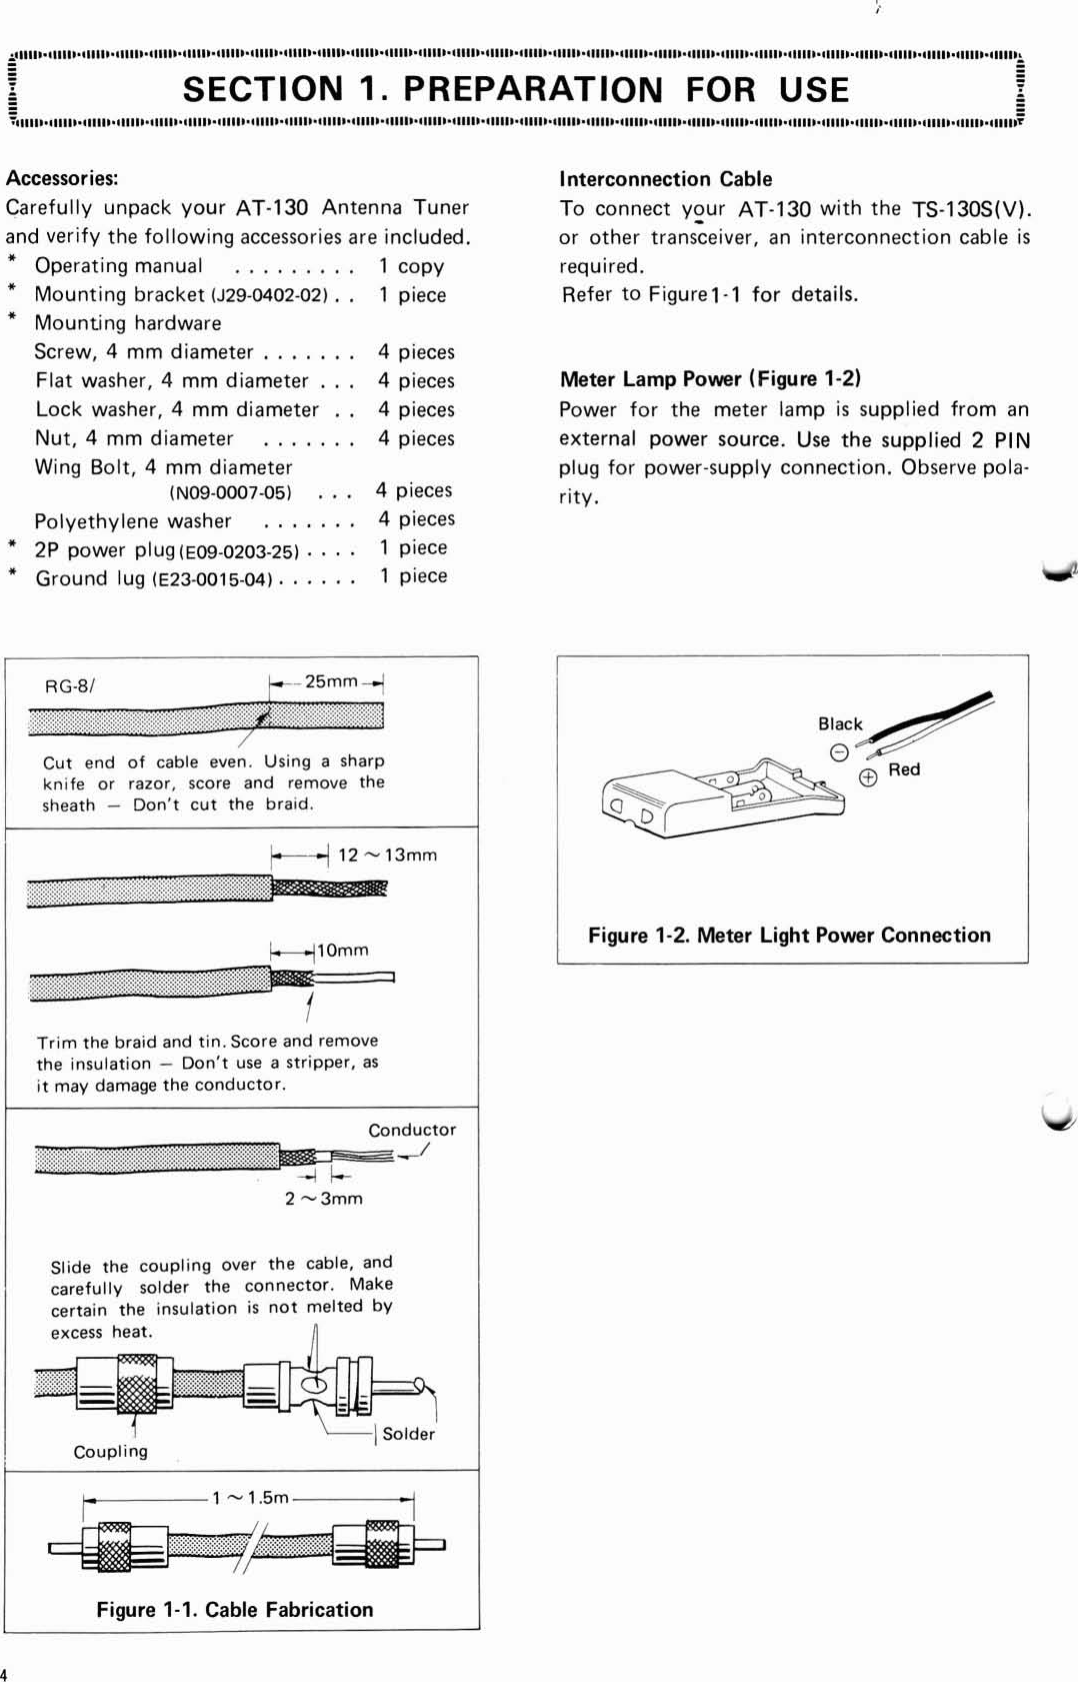 Page 4 of 12 - Kenwood Kenwood-Kenwood-Car-Stereo-System-At-130-Users-Manual- Antenna Tuner AT-130 Instruction Manual  Kenwood-kenwood-car-stereo-system-at-130-users-manual